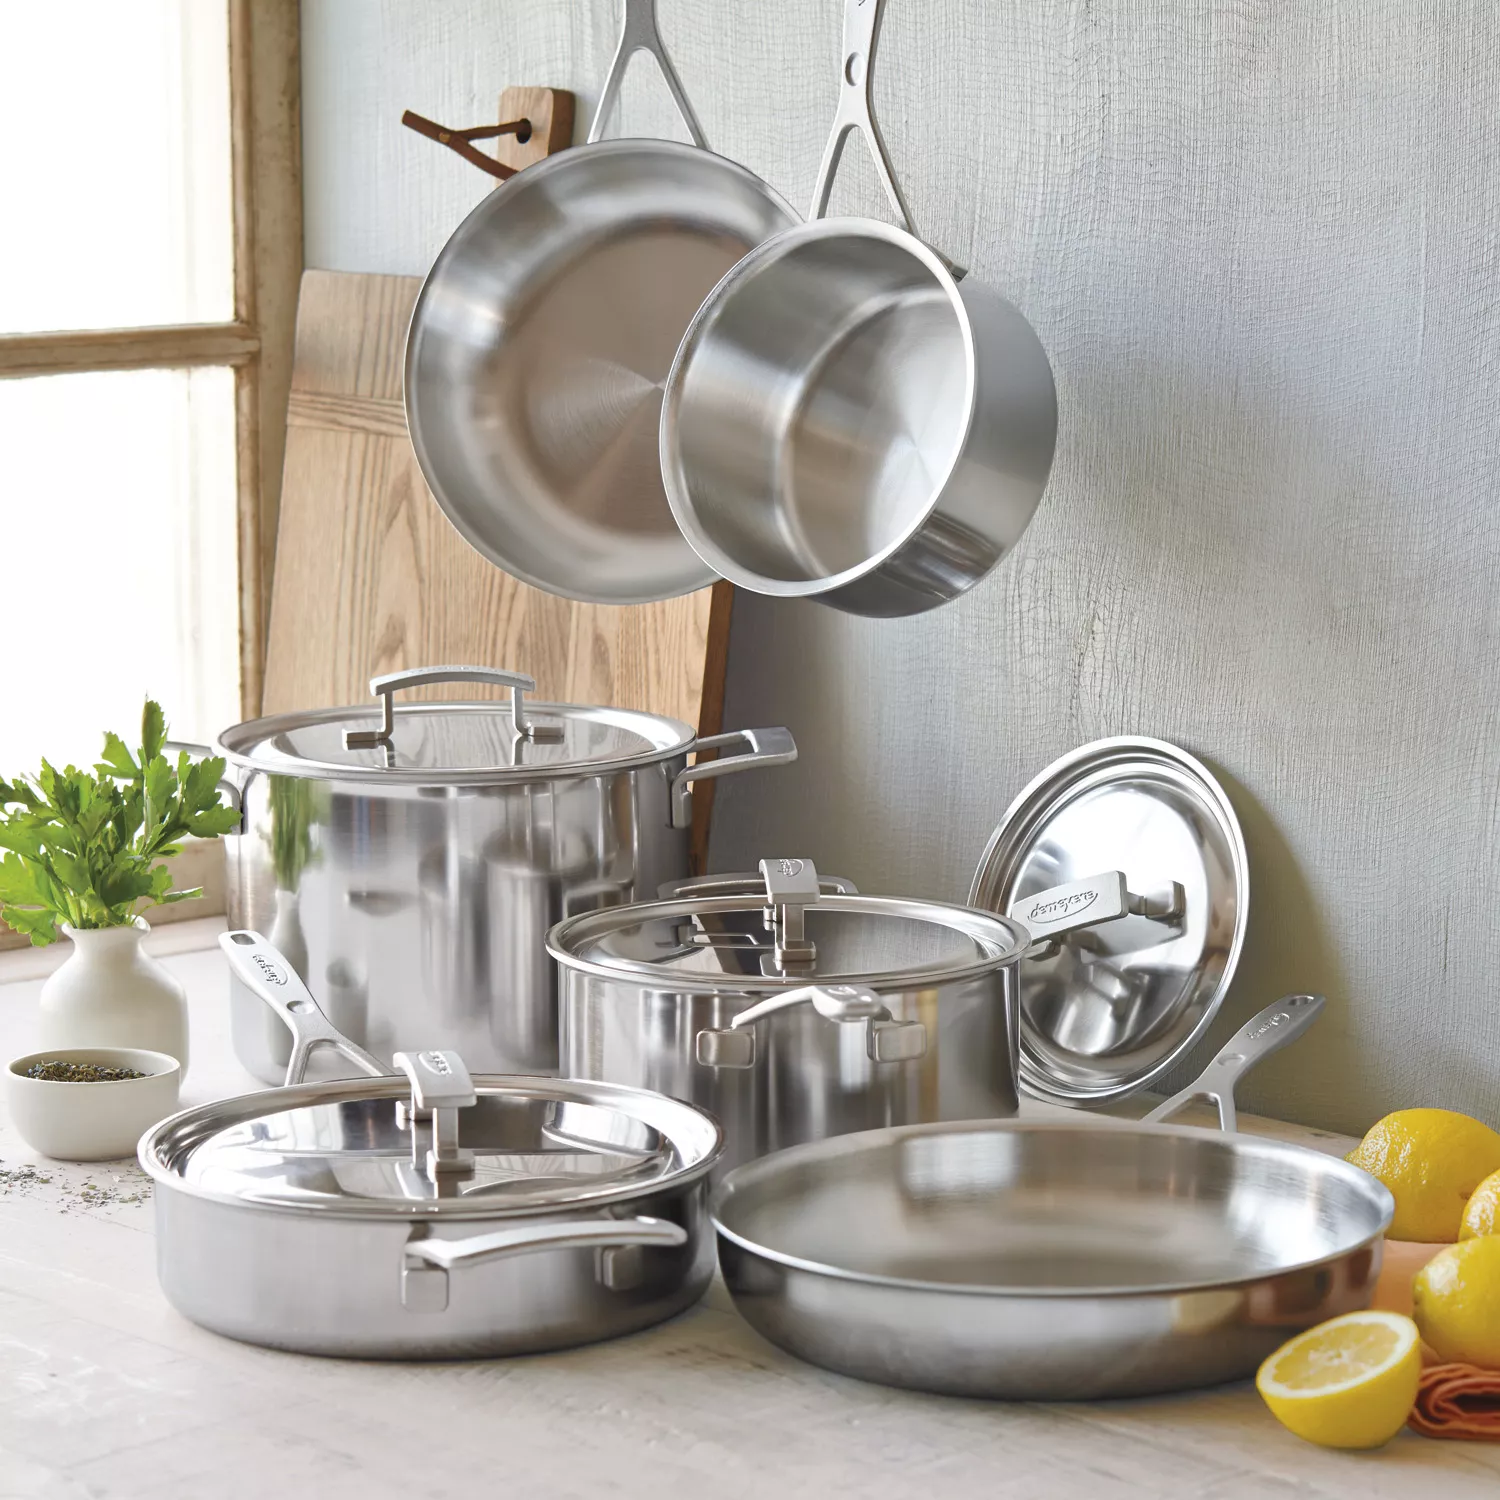 Demeyere Industry5 Stainless-Steel Cookware Set, 10 Piece